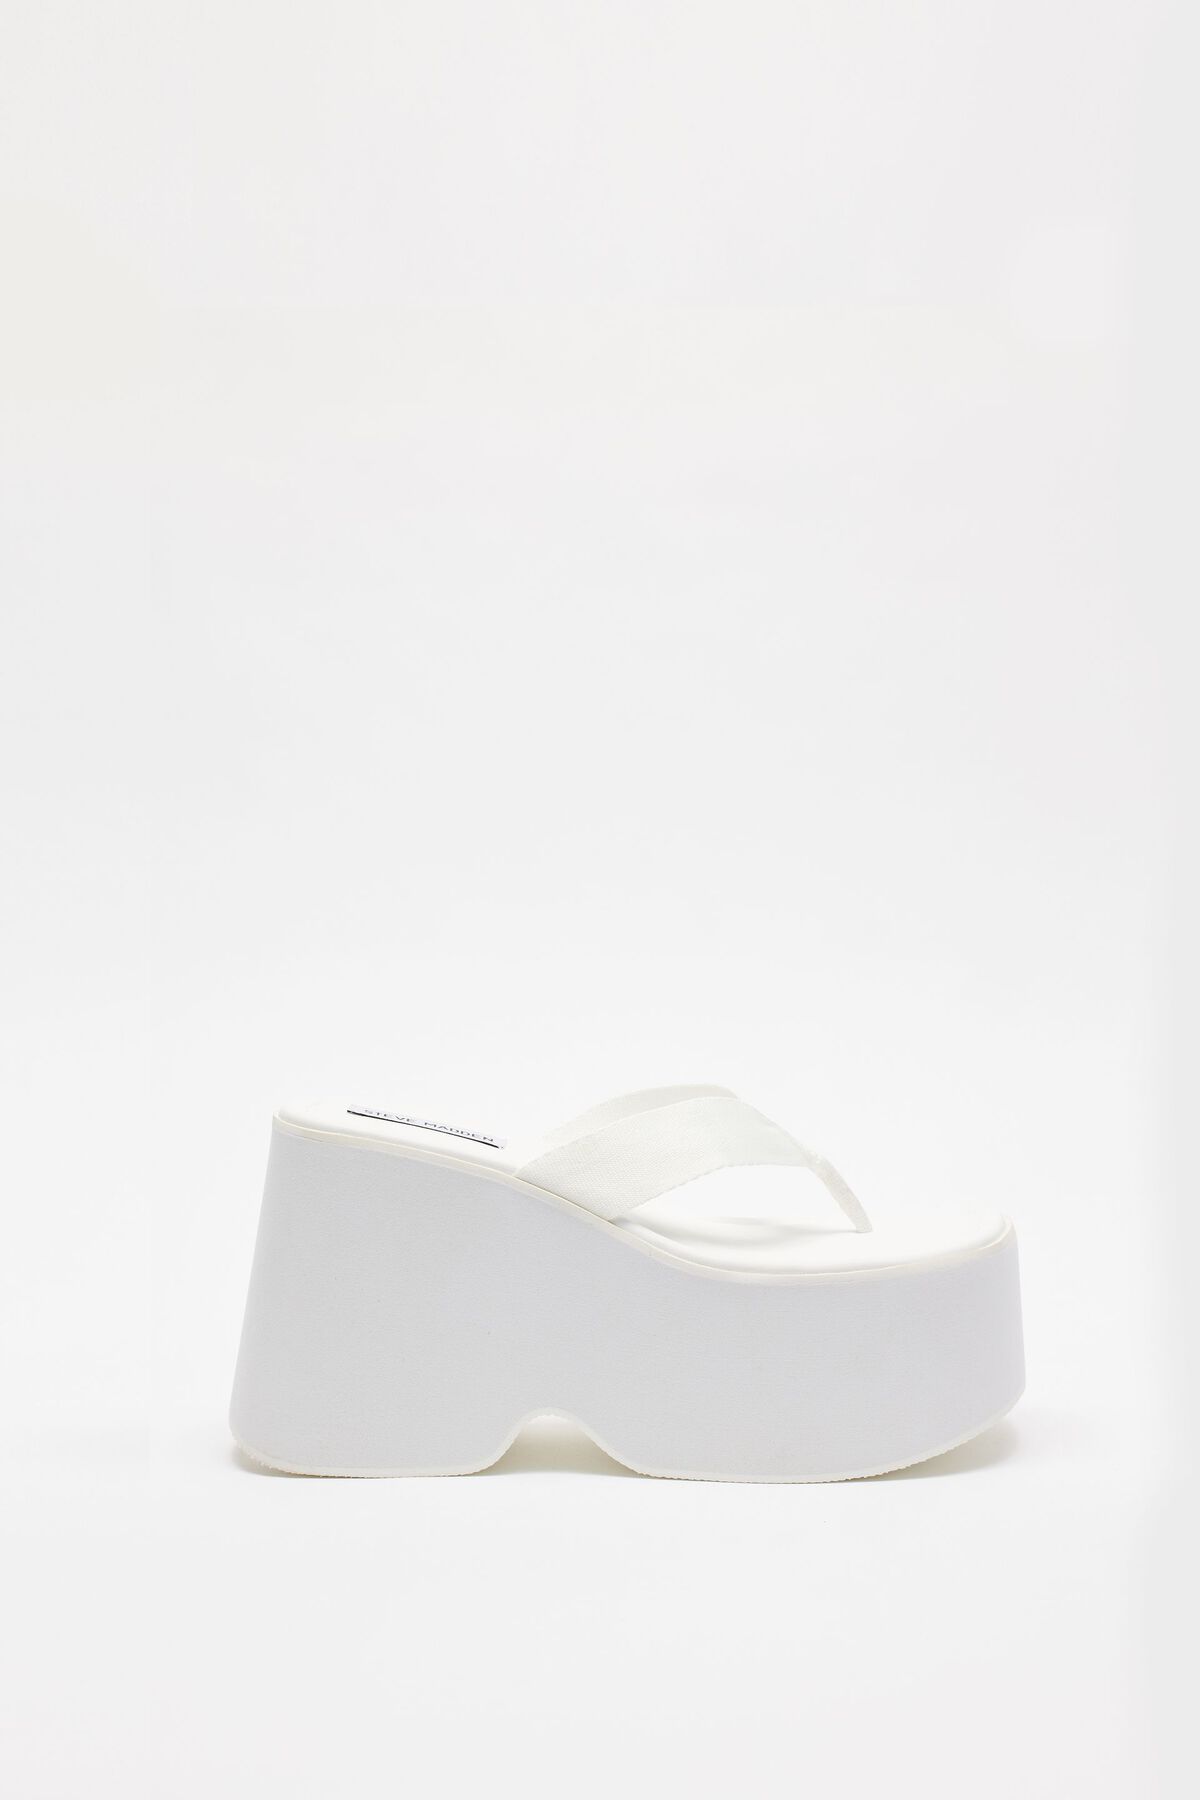 STEVE MADDEN Gwen Platform Sandal White | Garage